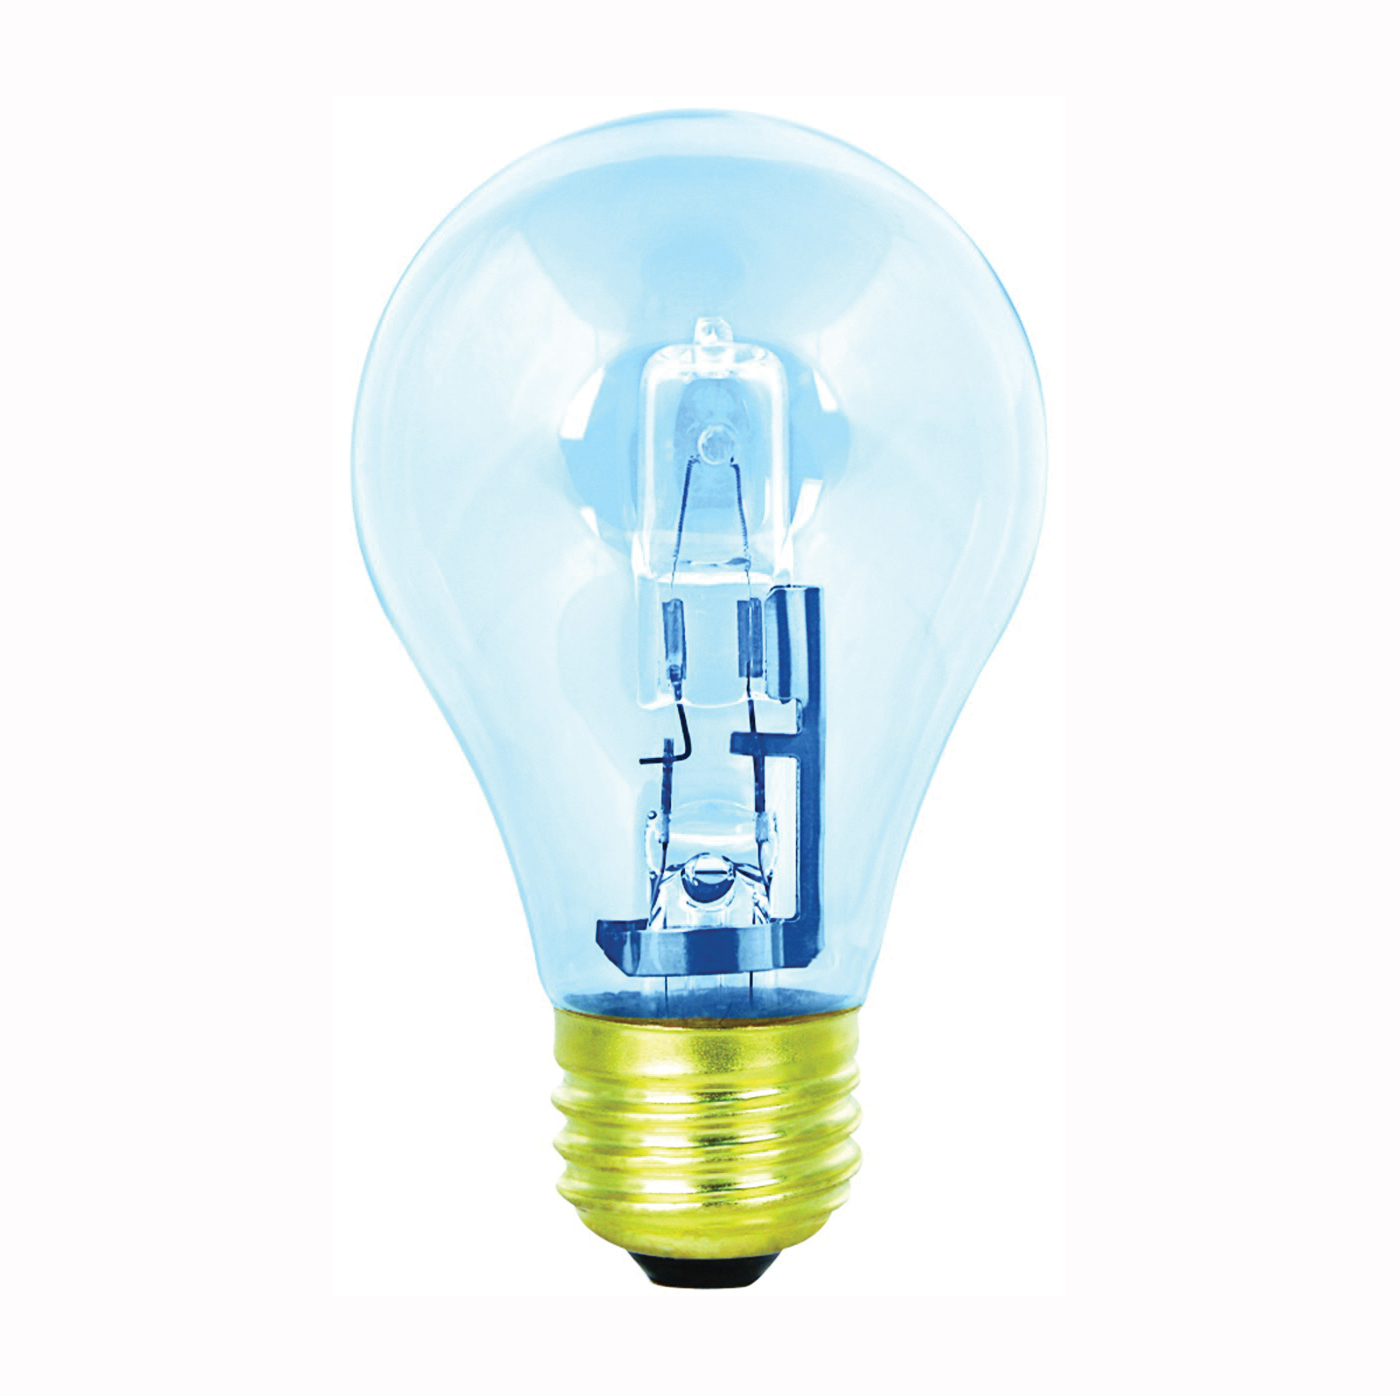 Q53A/CL/D/2 Halogen Bulb, 53 W, Medium E26 Lamp Base, A19 Lamp, Soft White Light, 790 Lumens